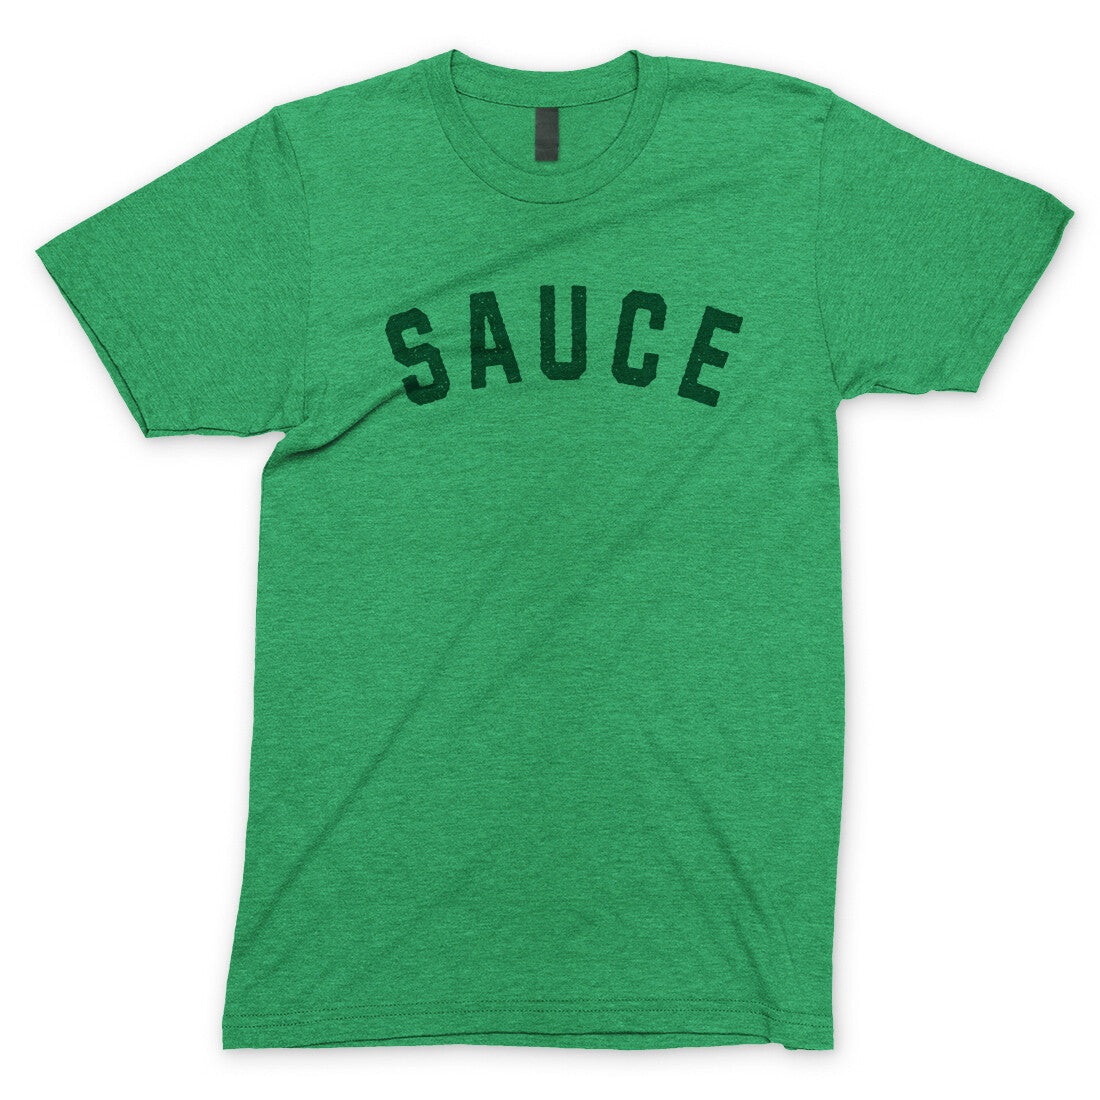 Sauce in Heather Irish Green Color